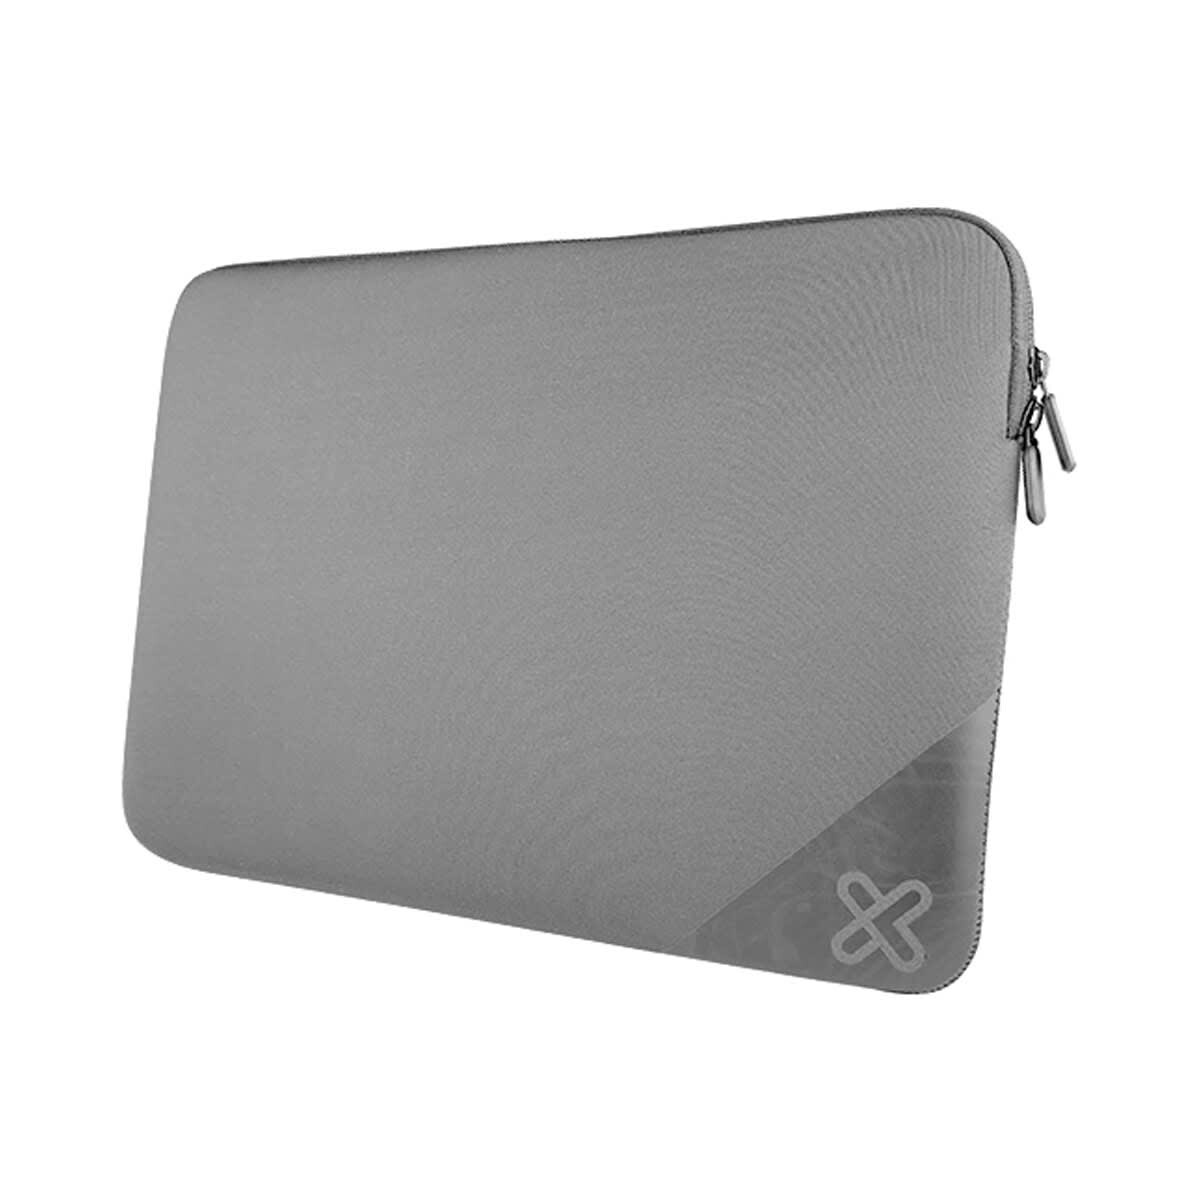 Funda para notebook laptop klip xtreme neoactive 15.6' kns-120 - Gris 